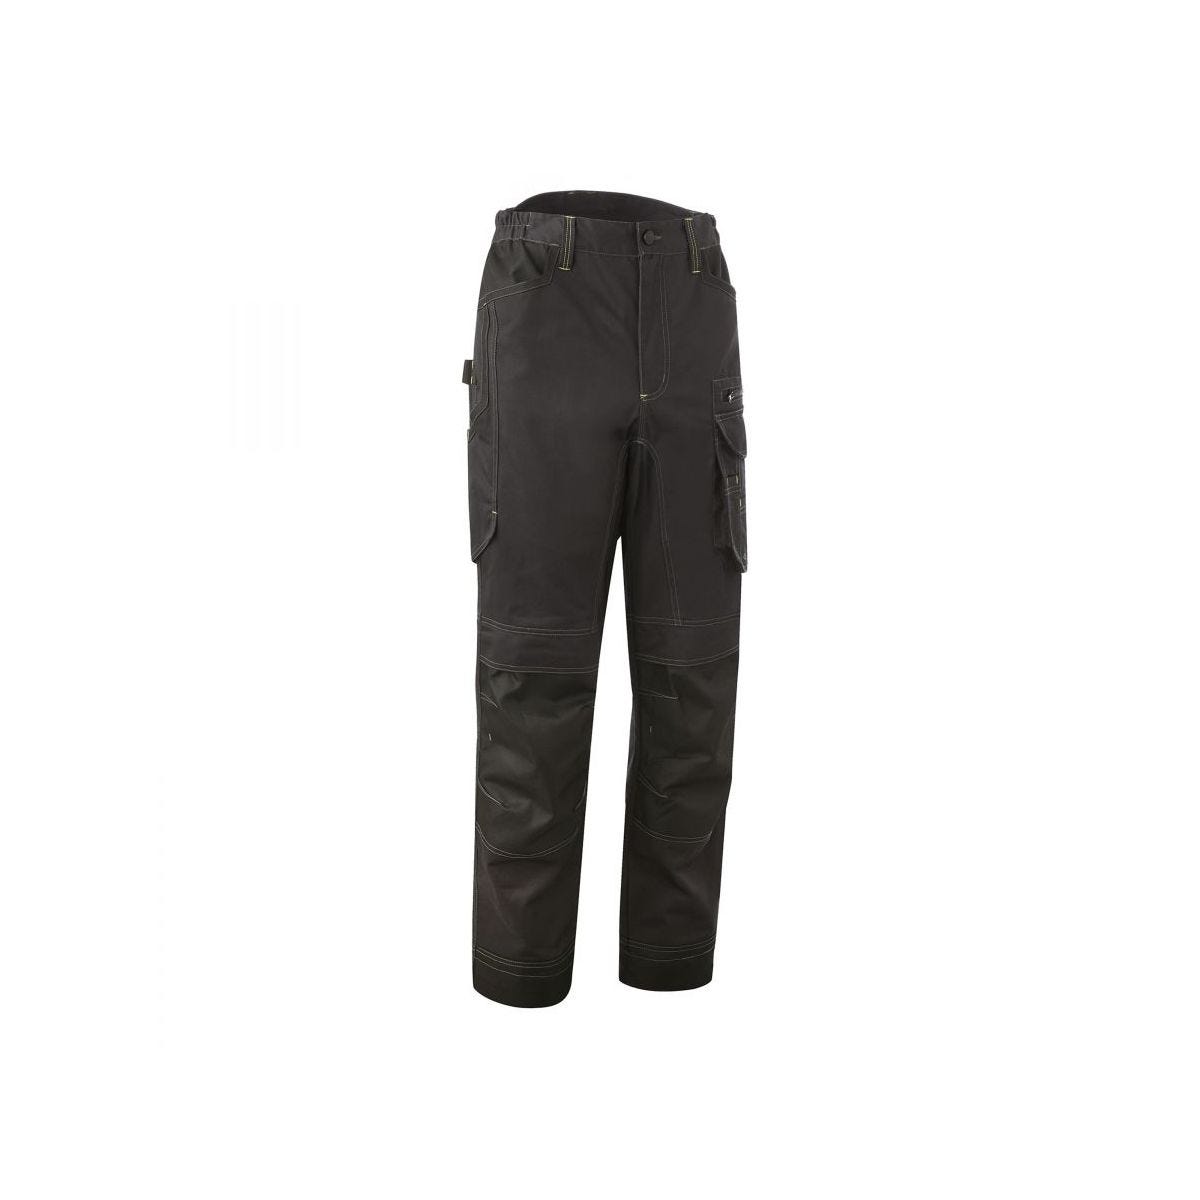 Pantalon BARVA Anthracite-Lime - Coverguard - Taille M 0